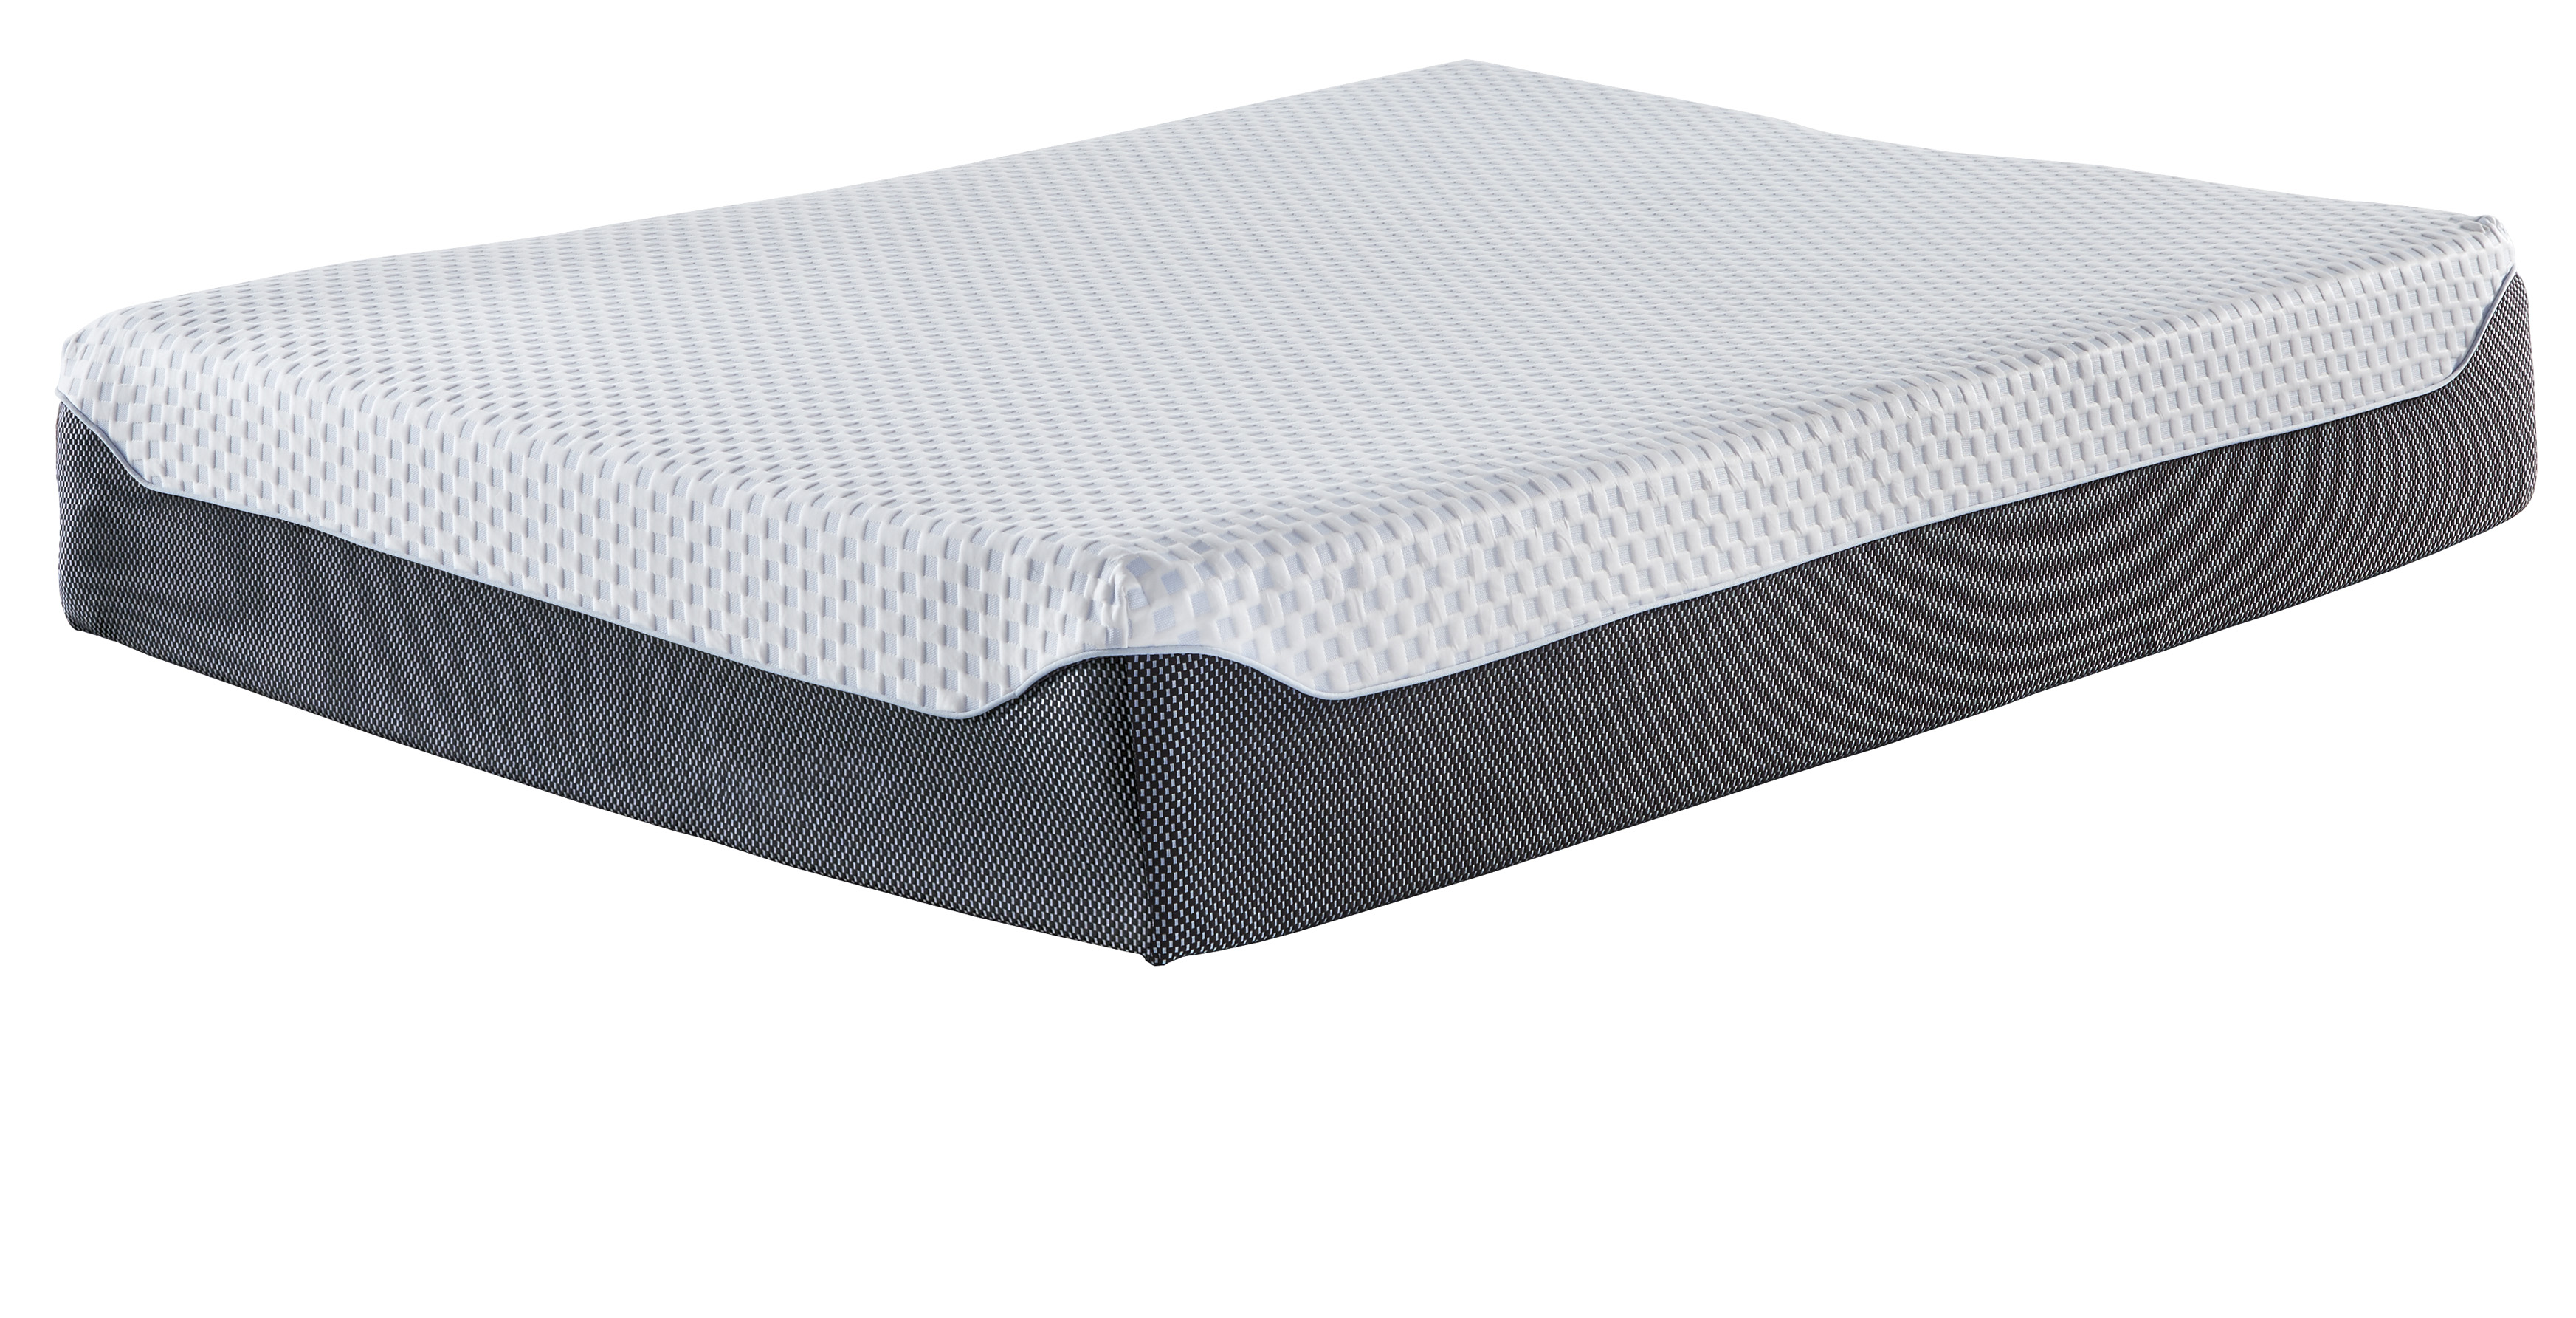 ashley sleep chime elite hybrid mattress revies